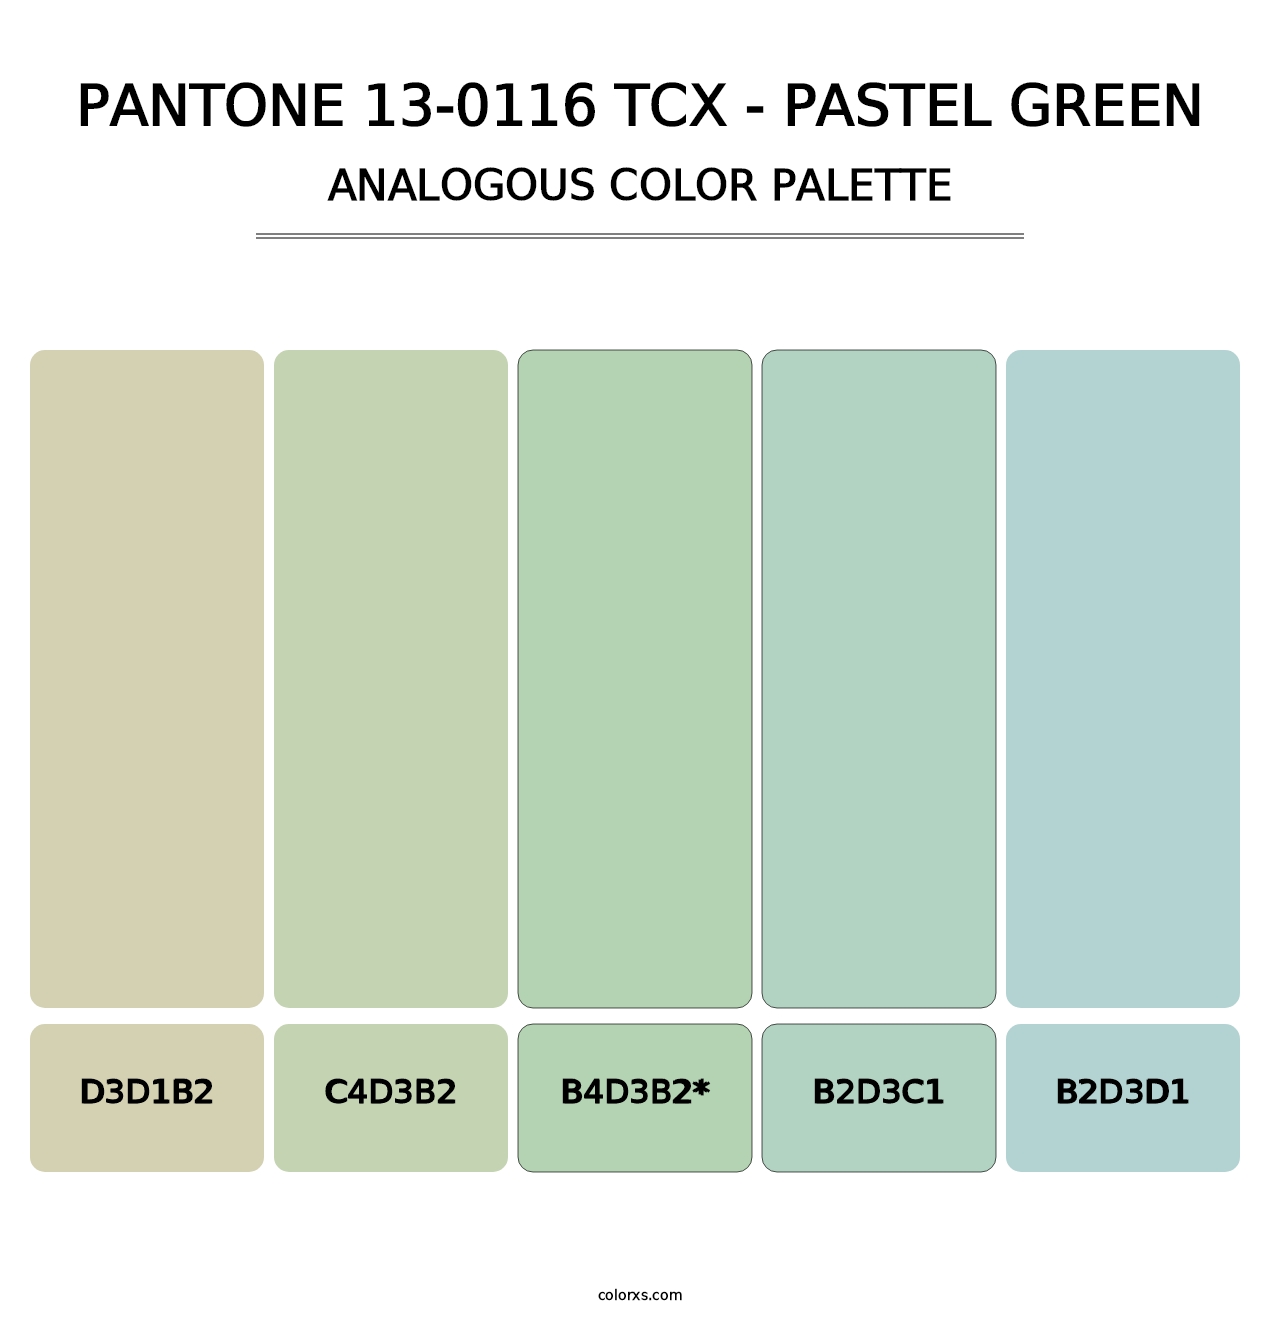 PANTONE 13-0116 TCX - Pastel Green - Analogous Color Palette